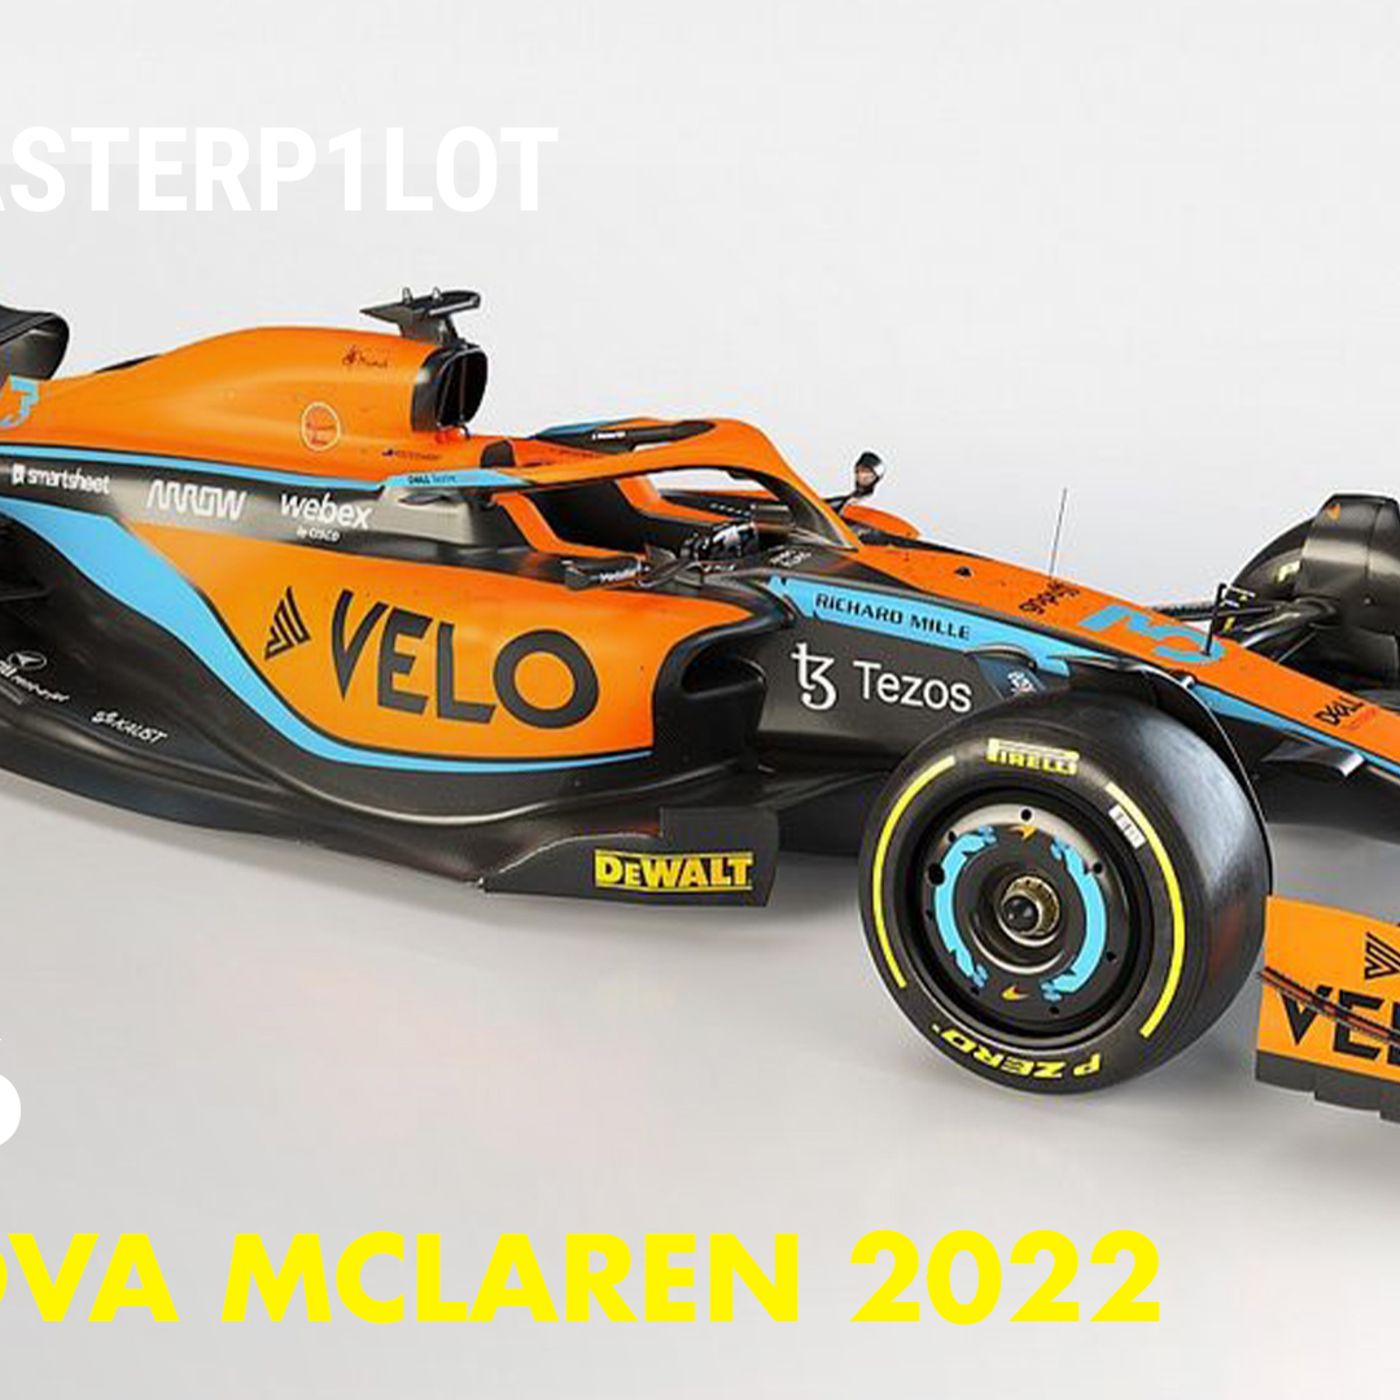 McLaren MCL36 | La F1 2022 di Woking è arrivata. "Belleppronta" per Norris e Ricciardo